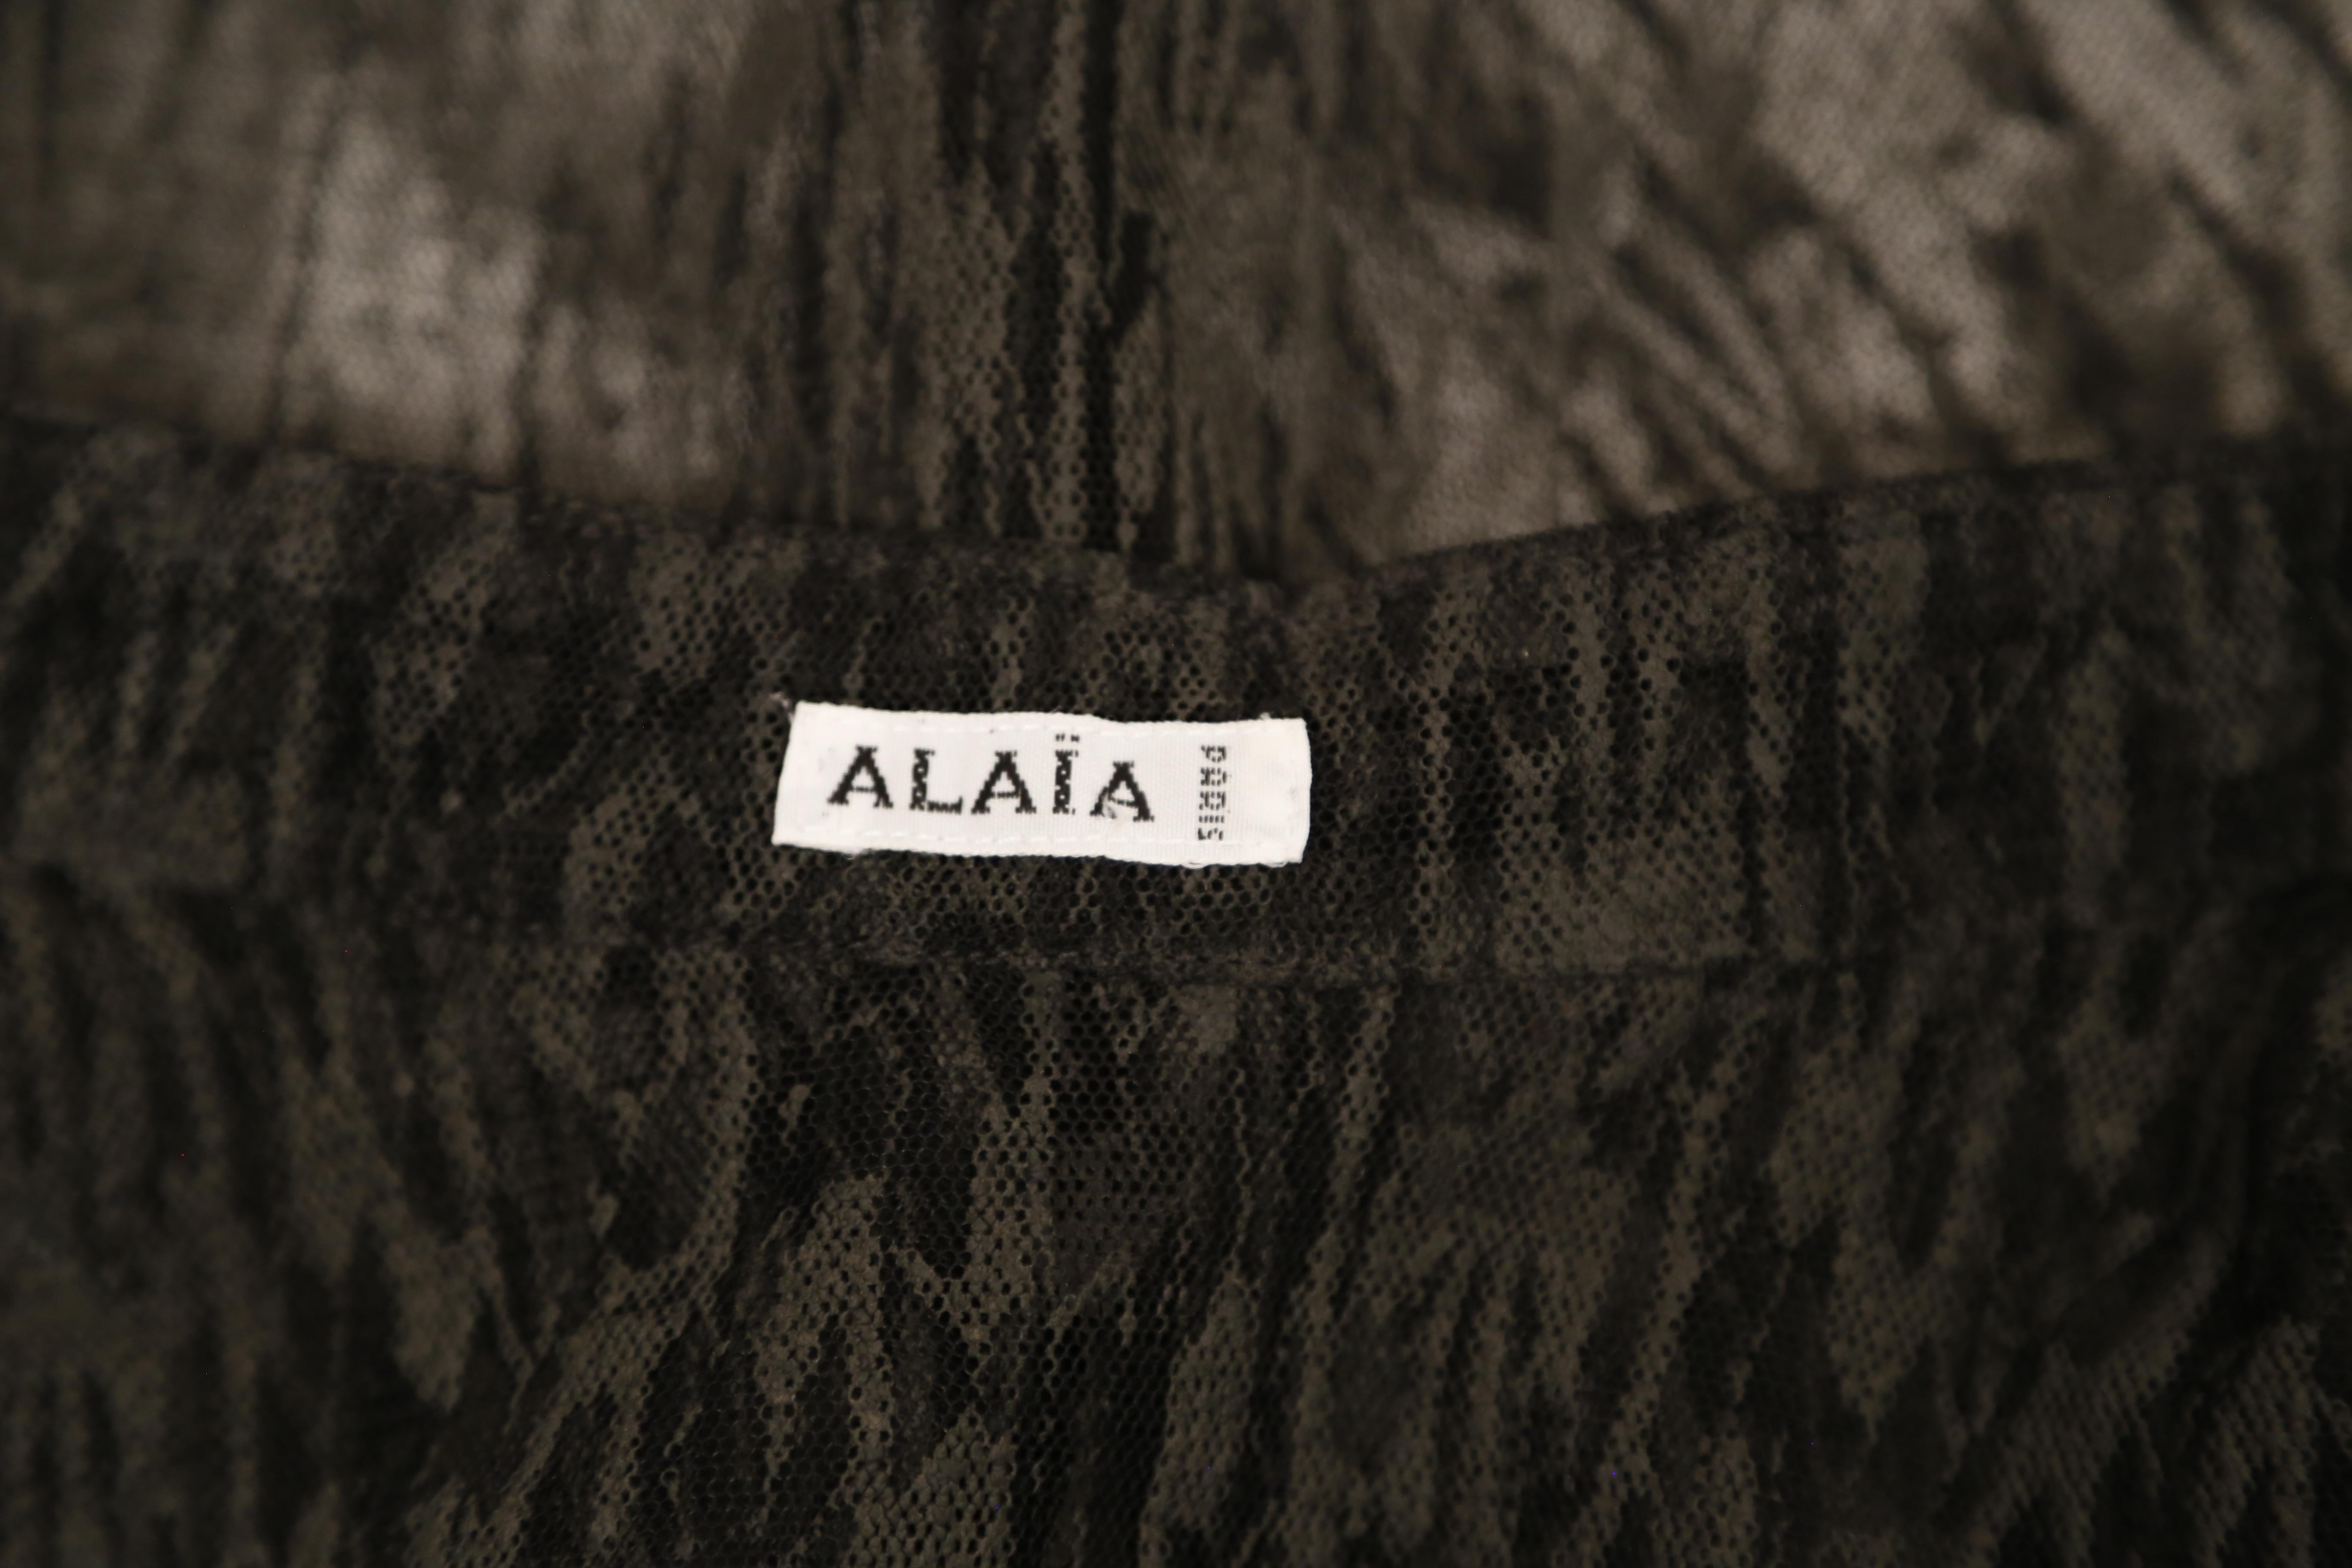 1987 AZZEDINE ALAIA black textured net RUNWAY button up shirt For Sale 2